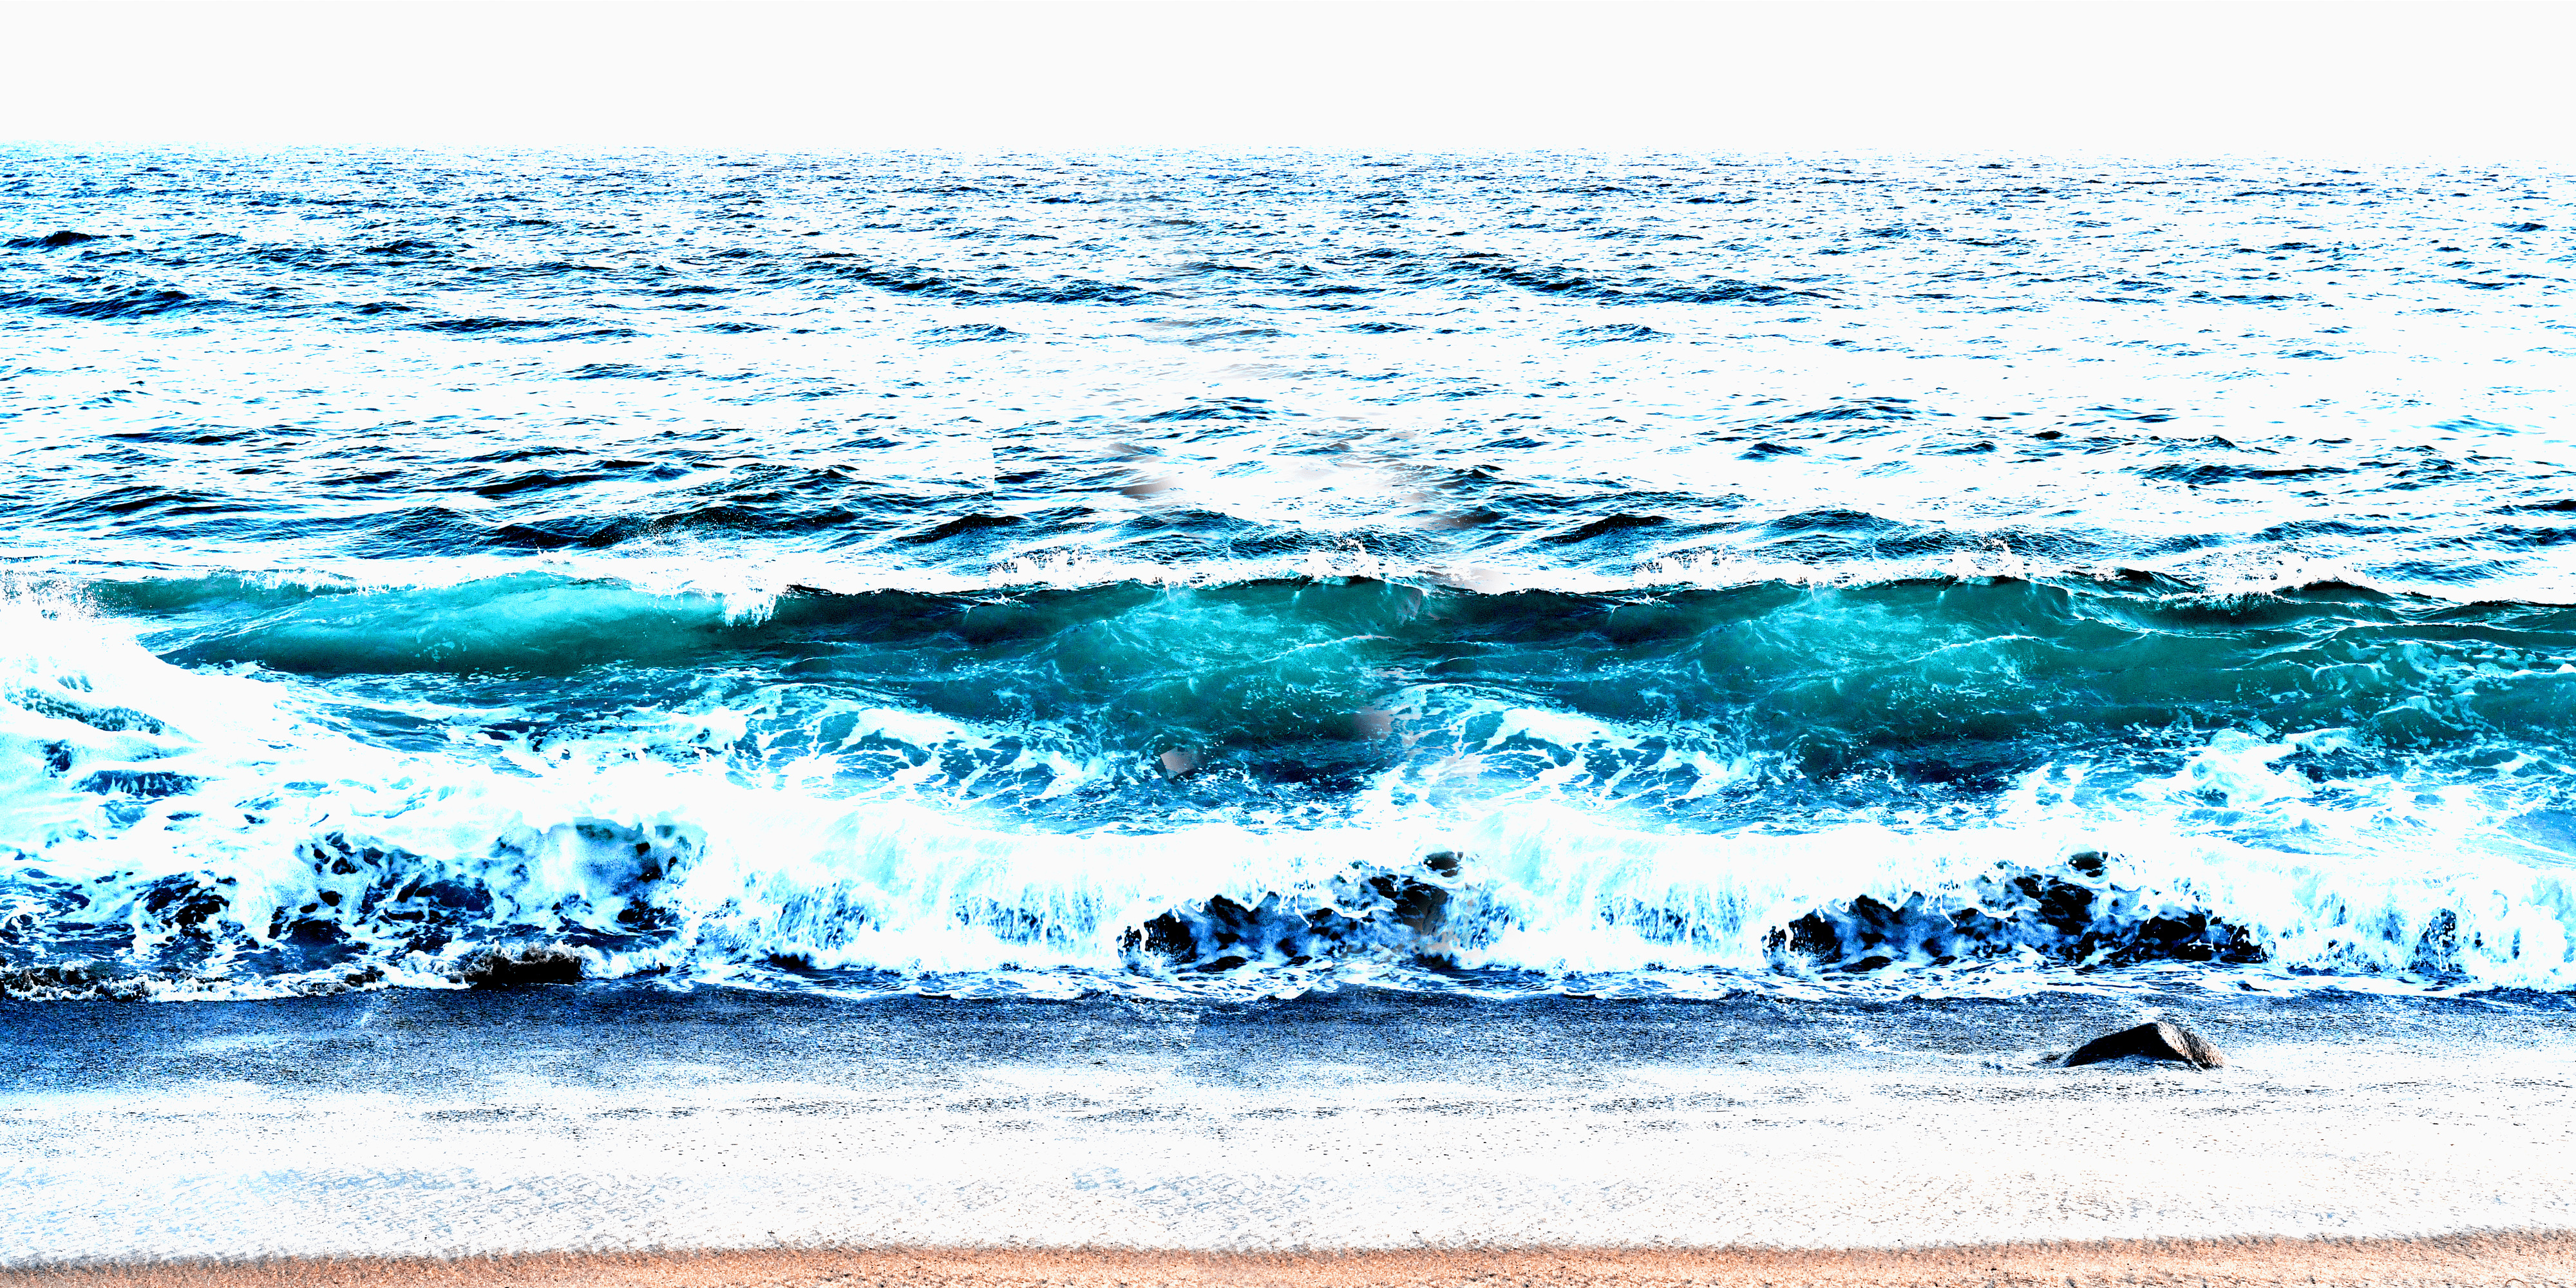 "Open Sea"  medium: digital / photo / camera: iPhone / size: 352 quintillion gallons / 2021